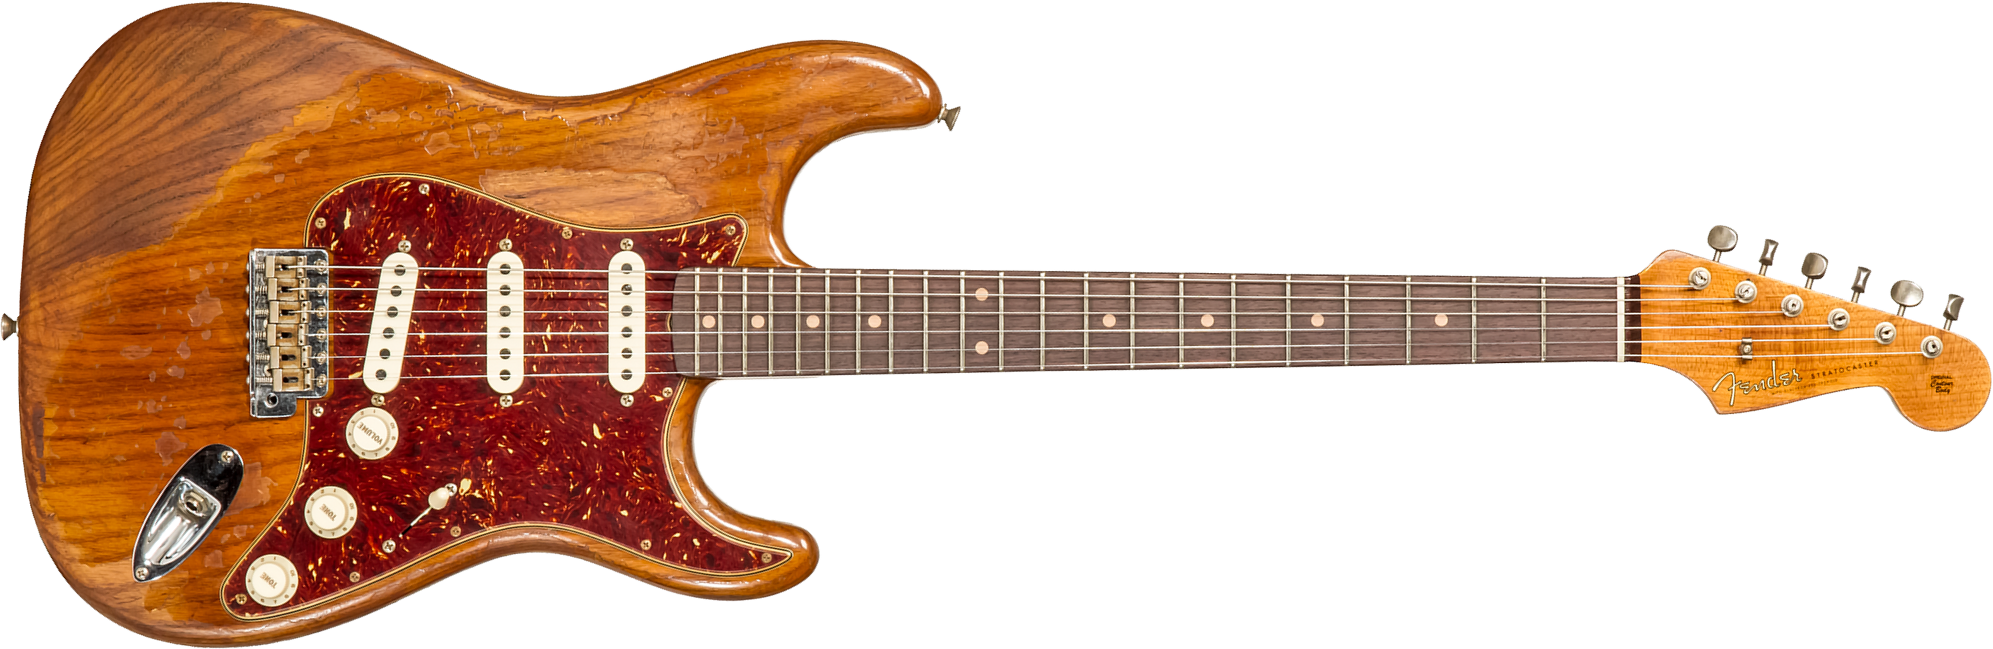 Fender Custom Shop Strat 1961 3s Trem Rw #cz570266 - Super Heavy Relic Natural - Elektrische gitaar in Str-vorm - Main picture